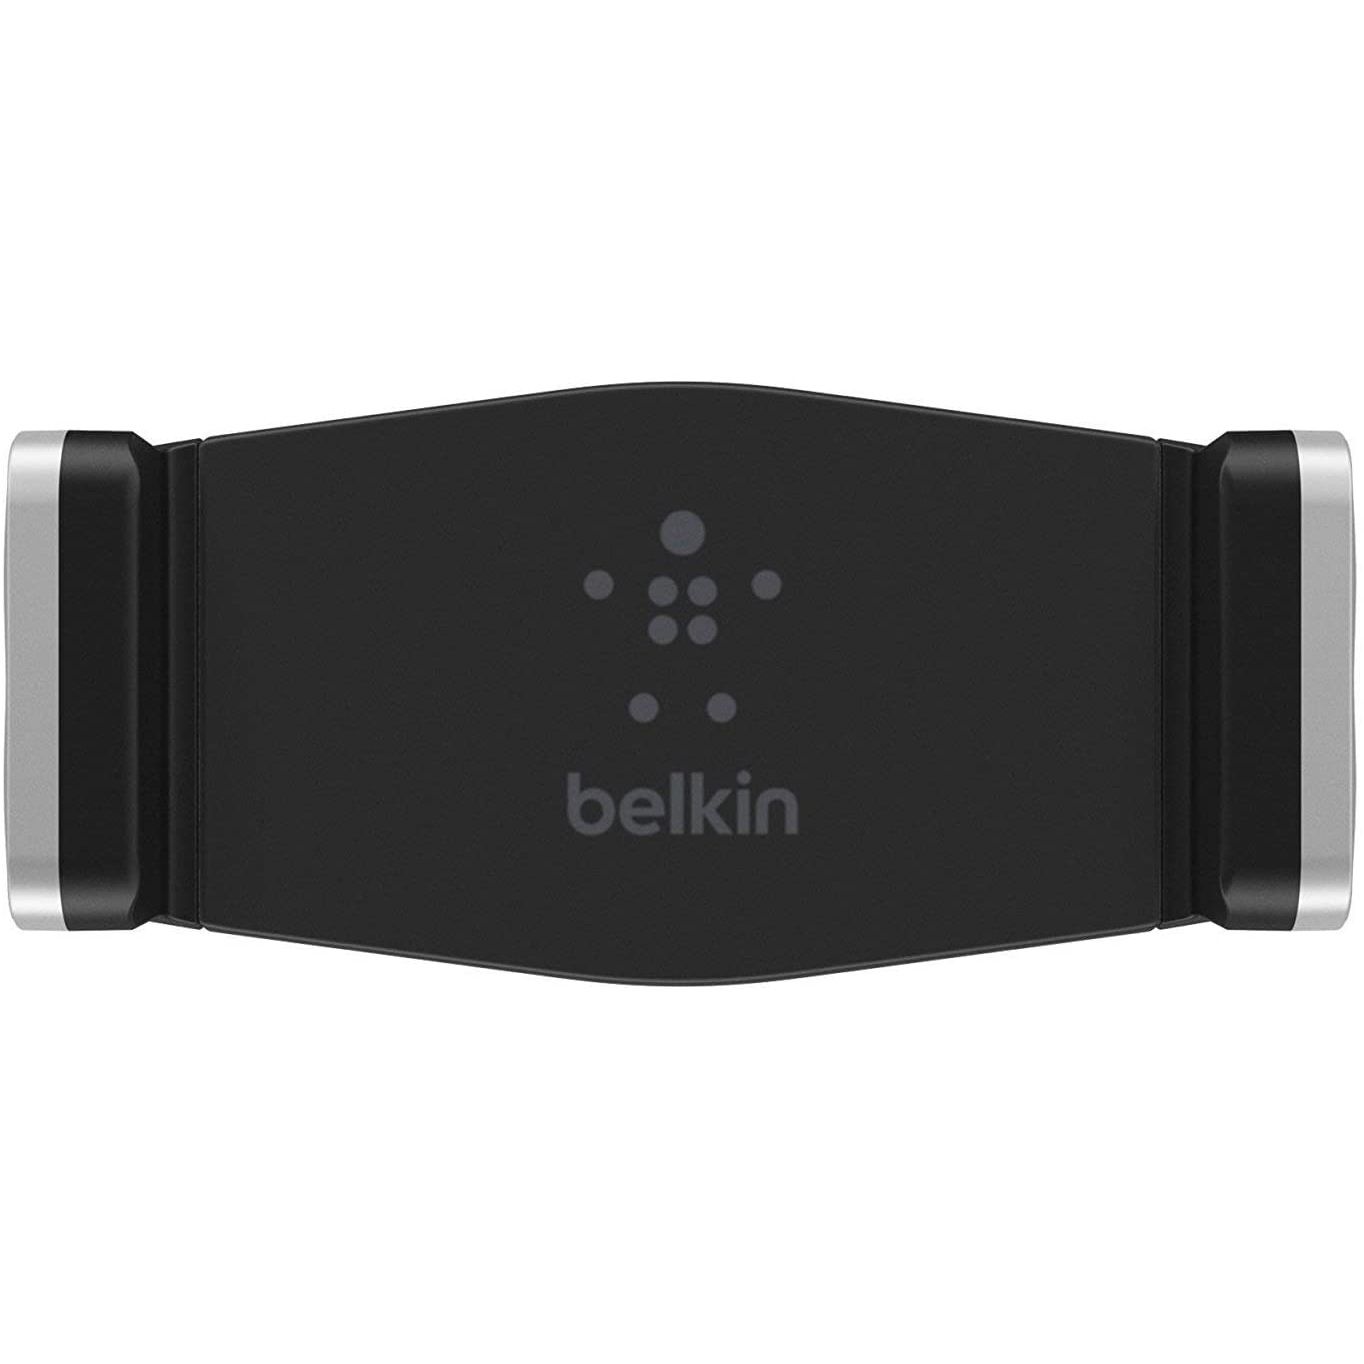 belkin-air-vent-mount-square-render-01